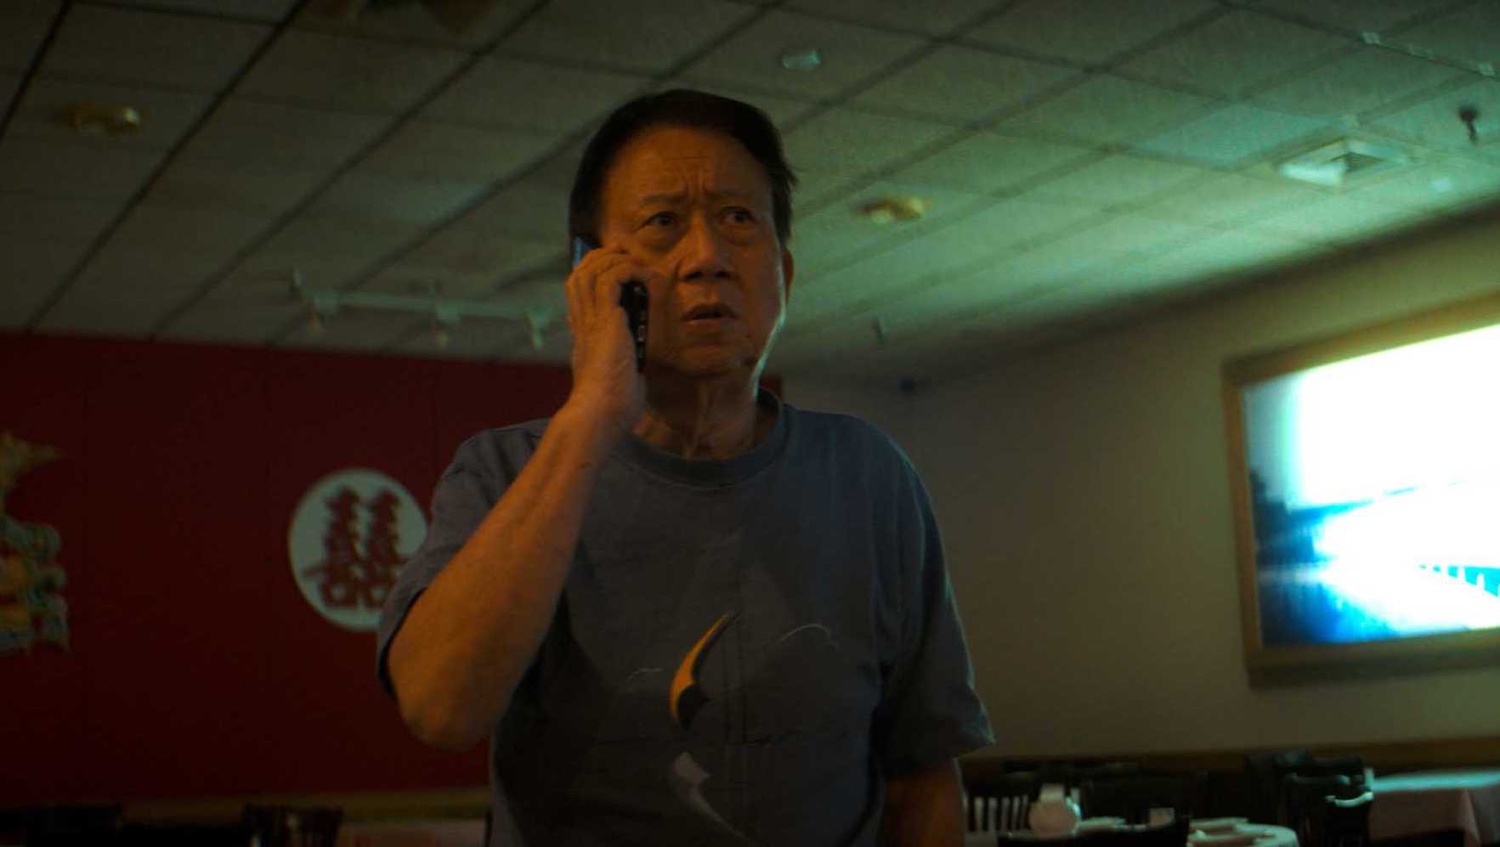 Jerry Hsu stars as himself in the docu-fiction hybrid film "Starring Jerry as Himself."